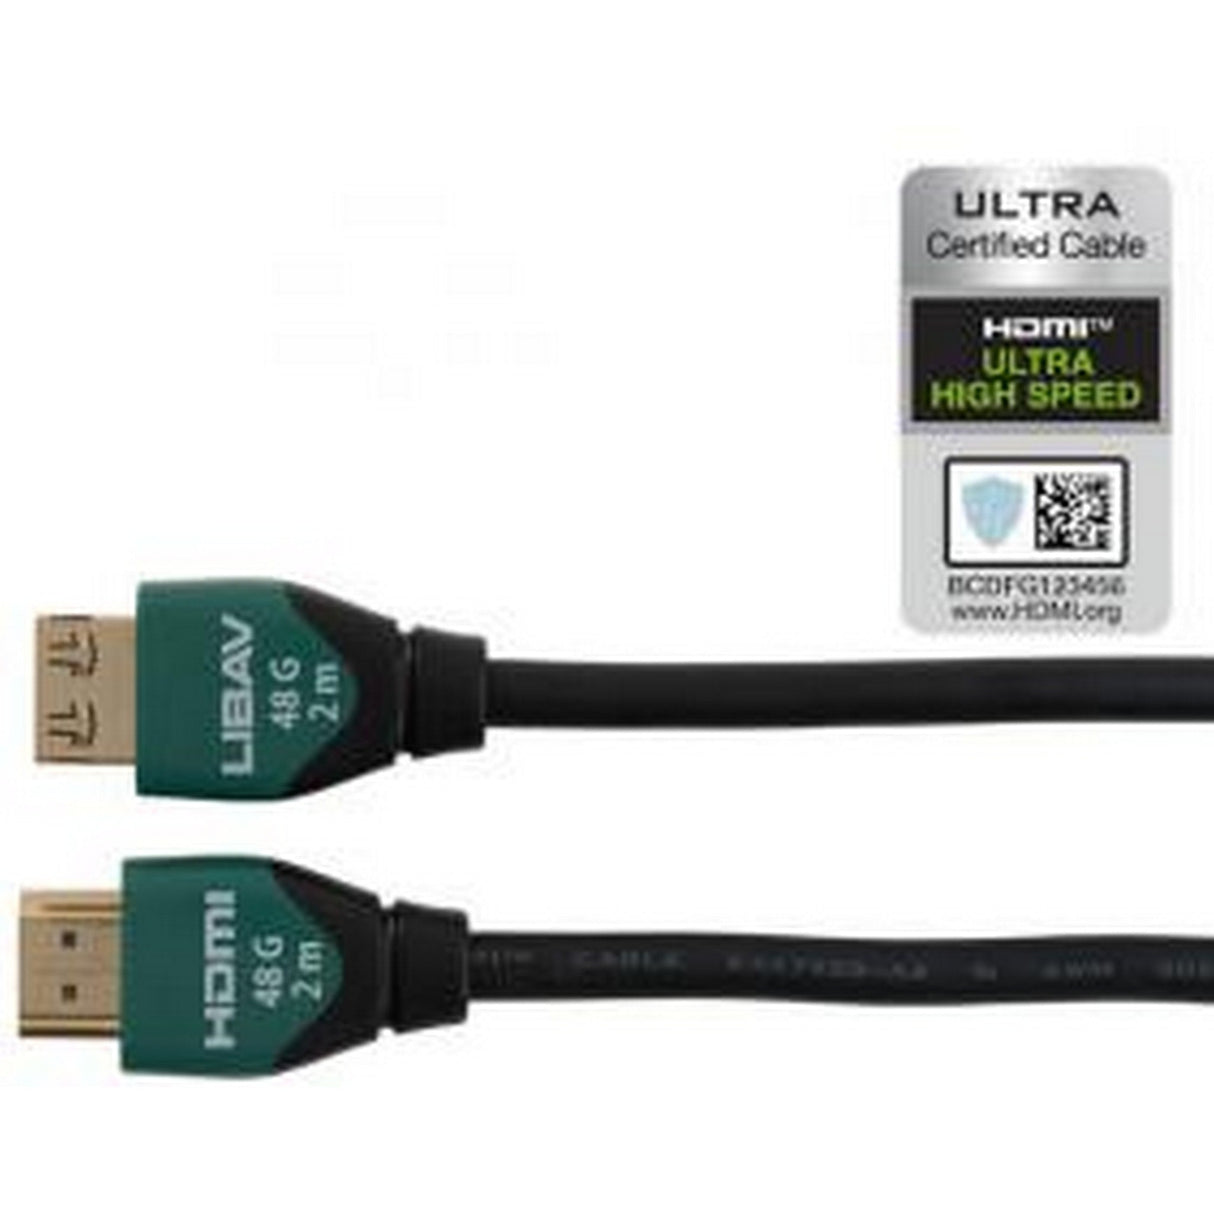 Liberty AV NEBULA-HM Nebula Premier Series Copper HDMI Cable